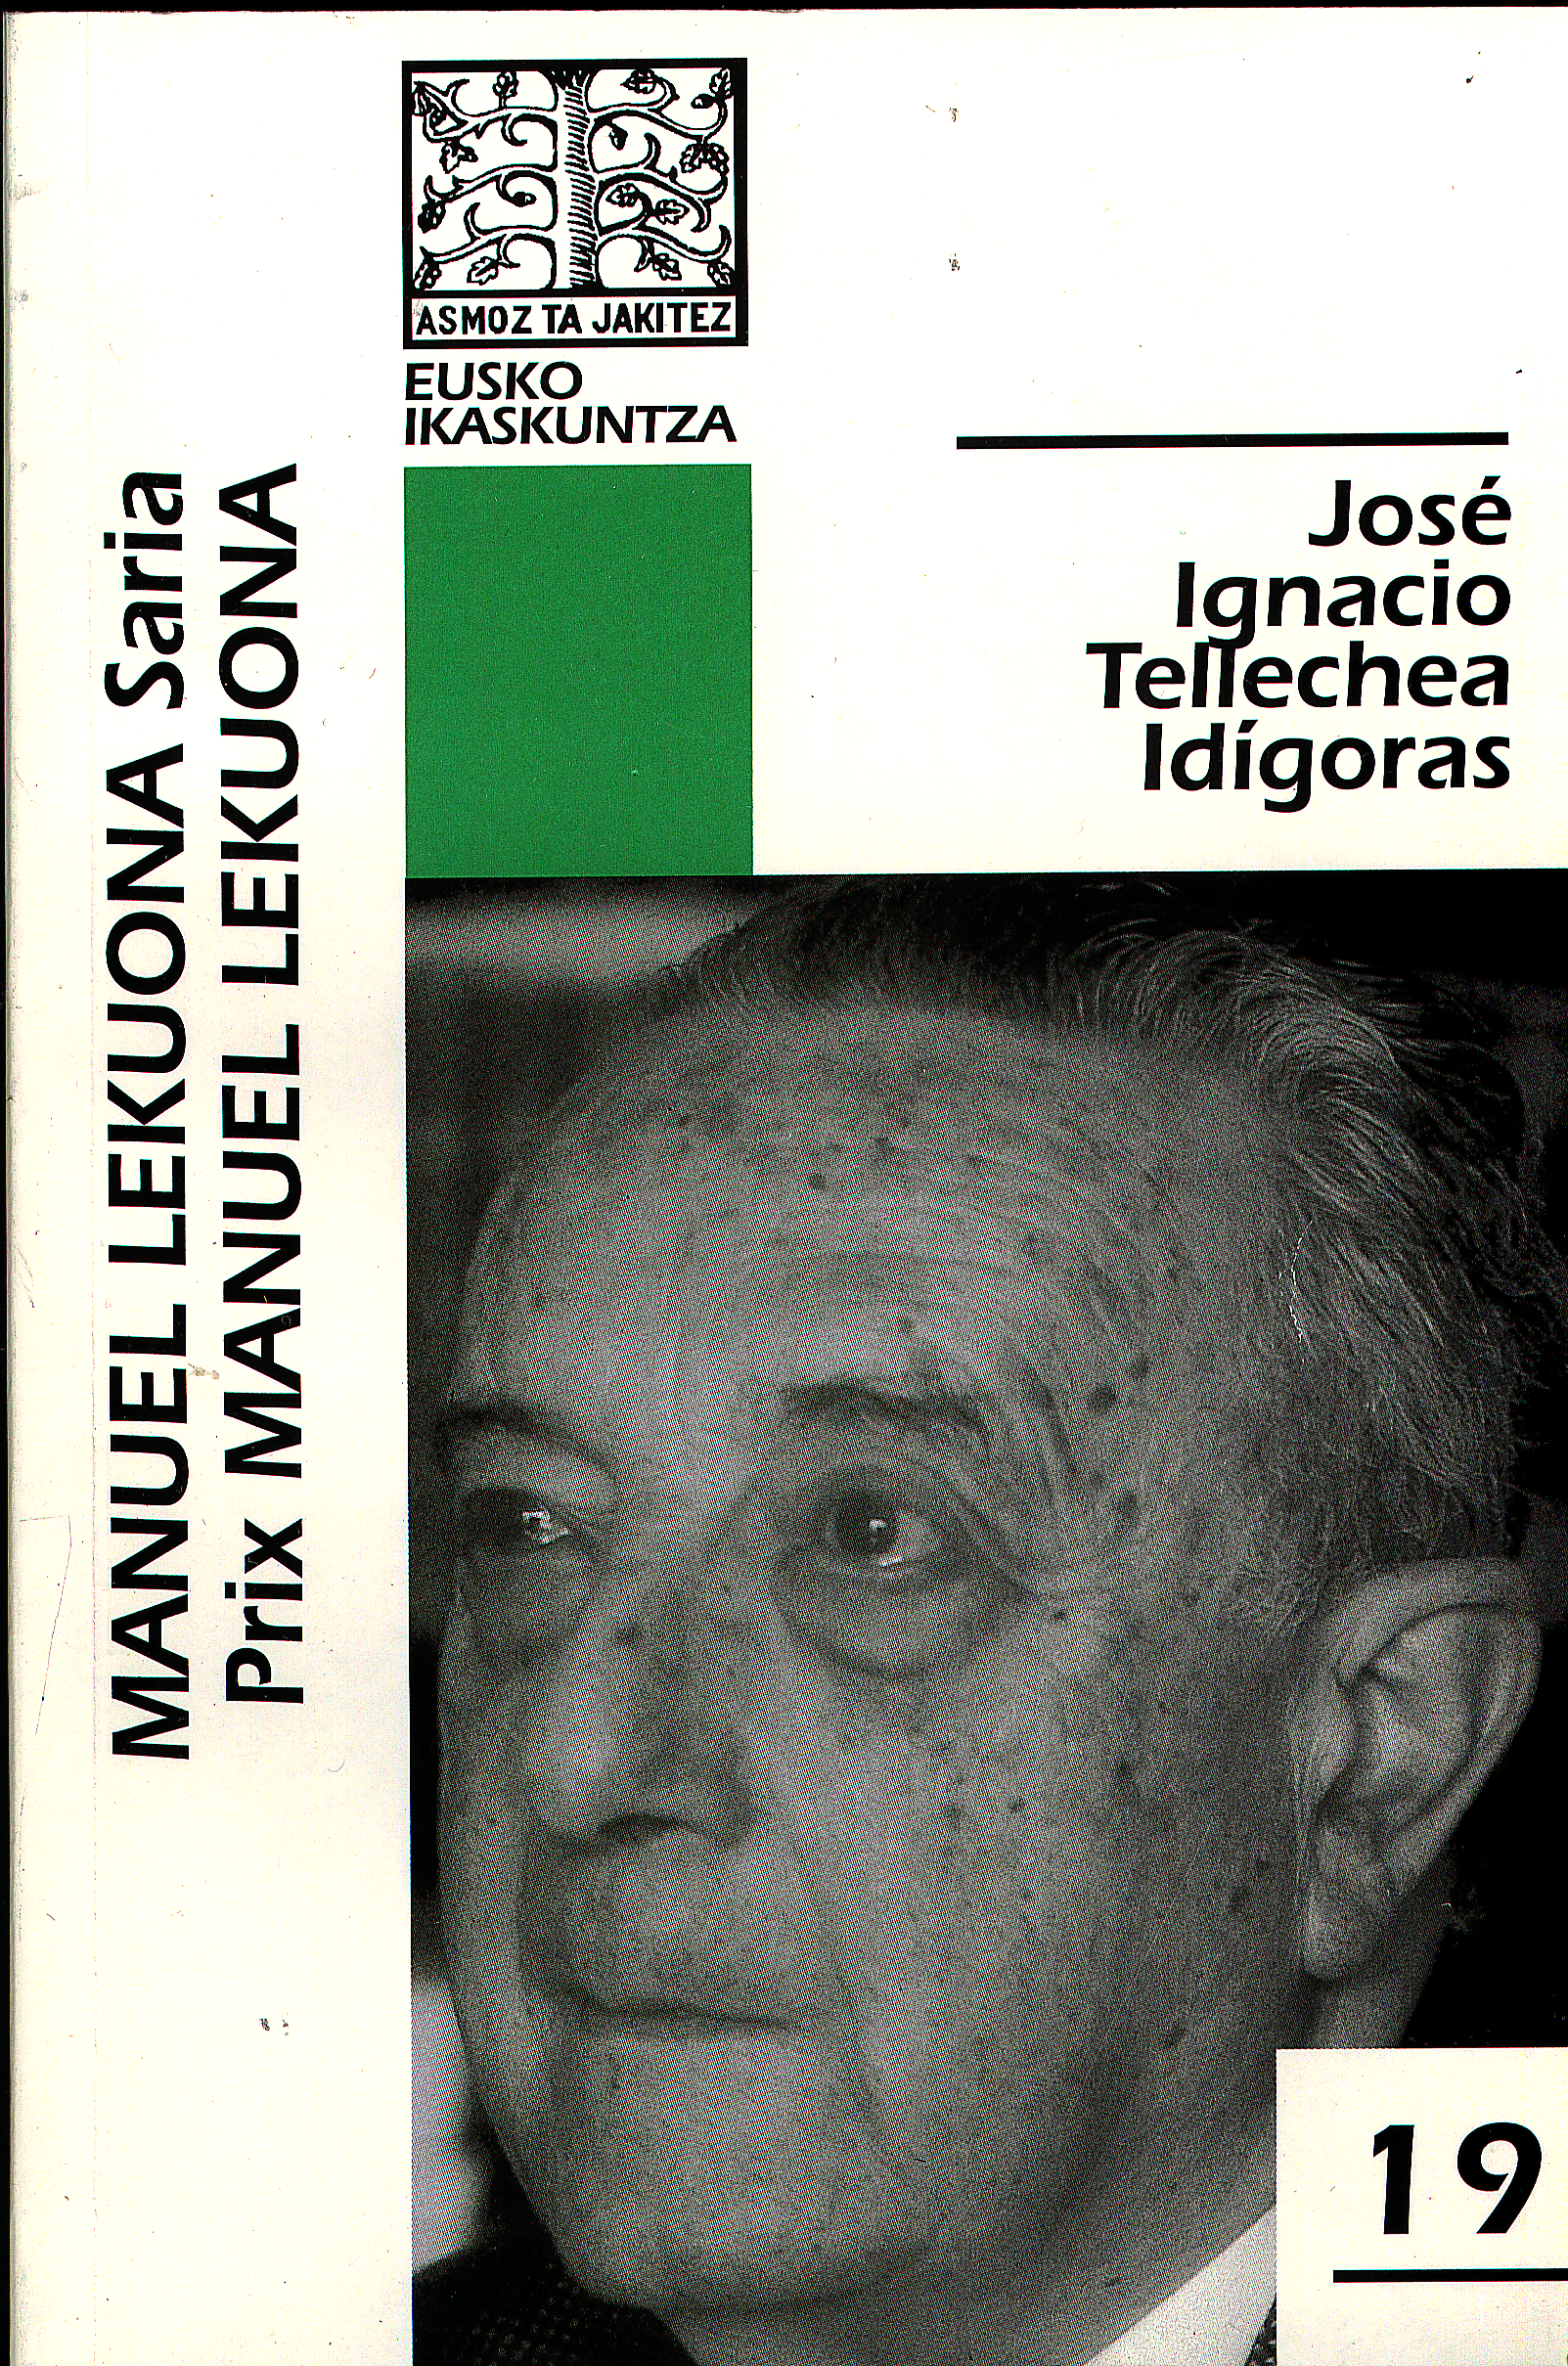 José Ignacio Tellechea Idígoras